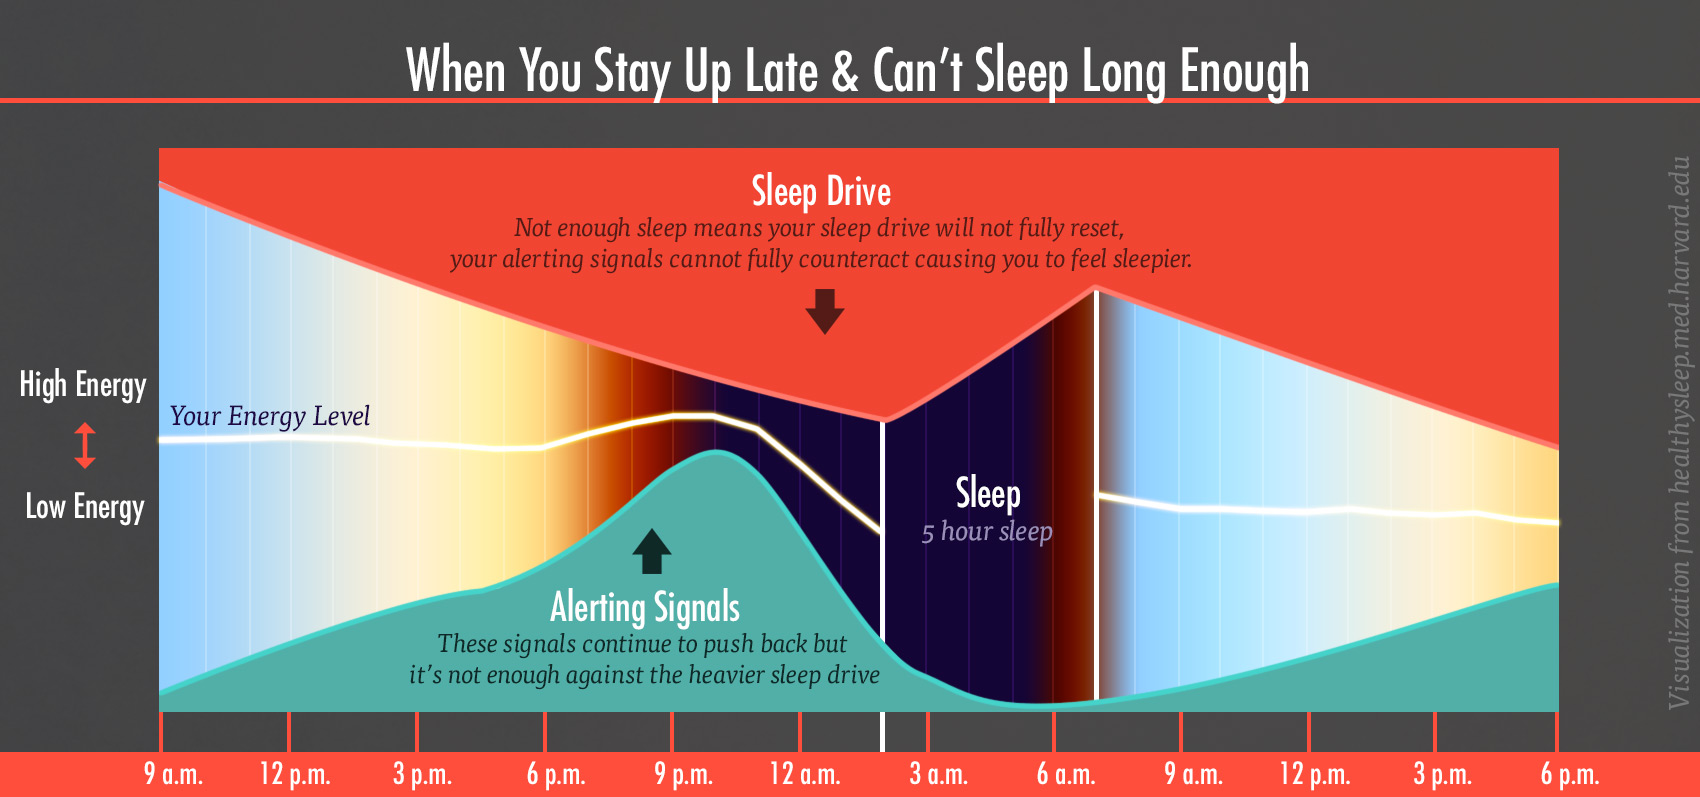 energy-levels-sleep-drive-alert-chart-2-bony-bombshell